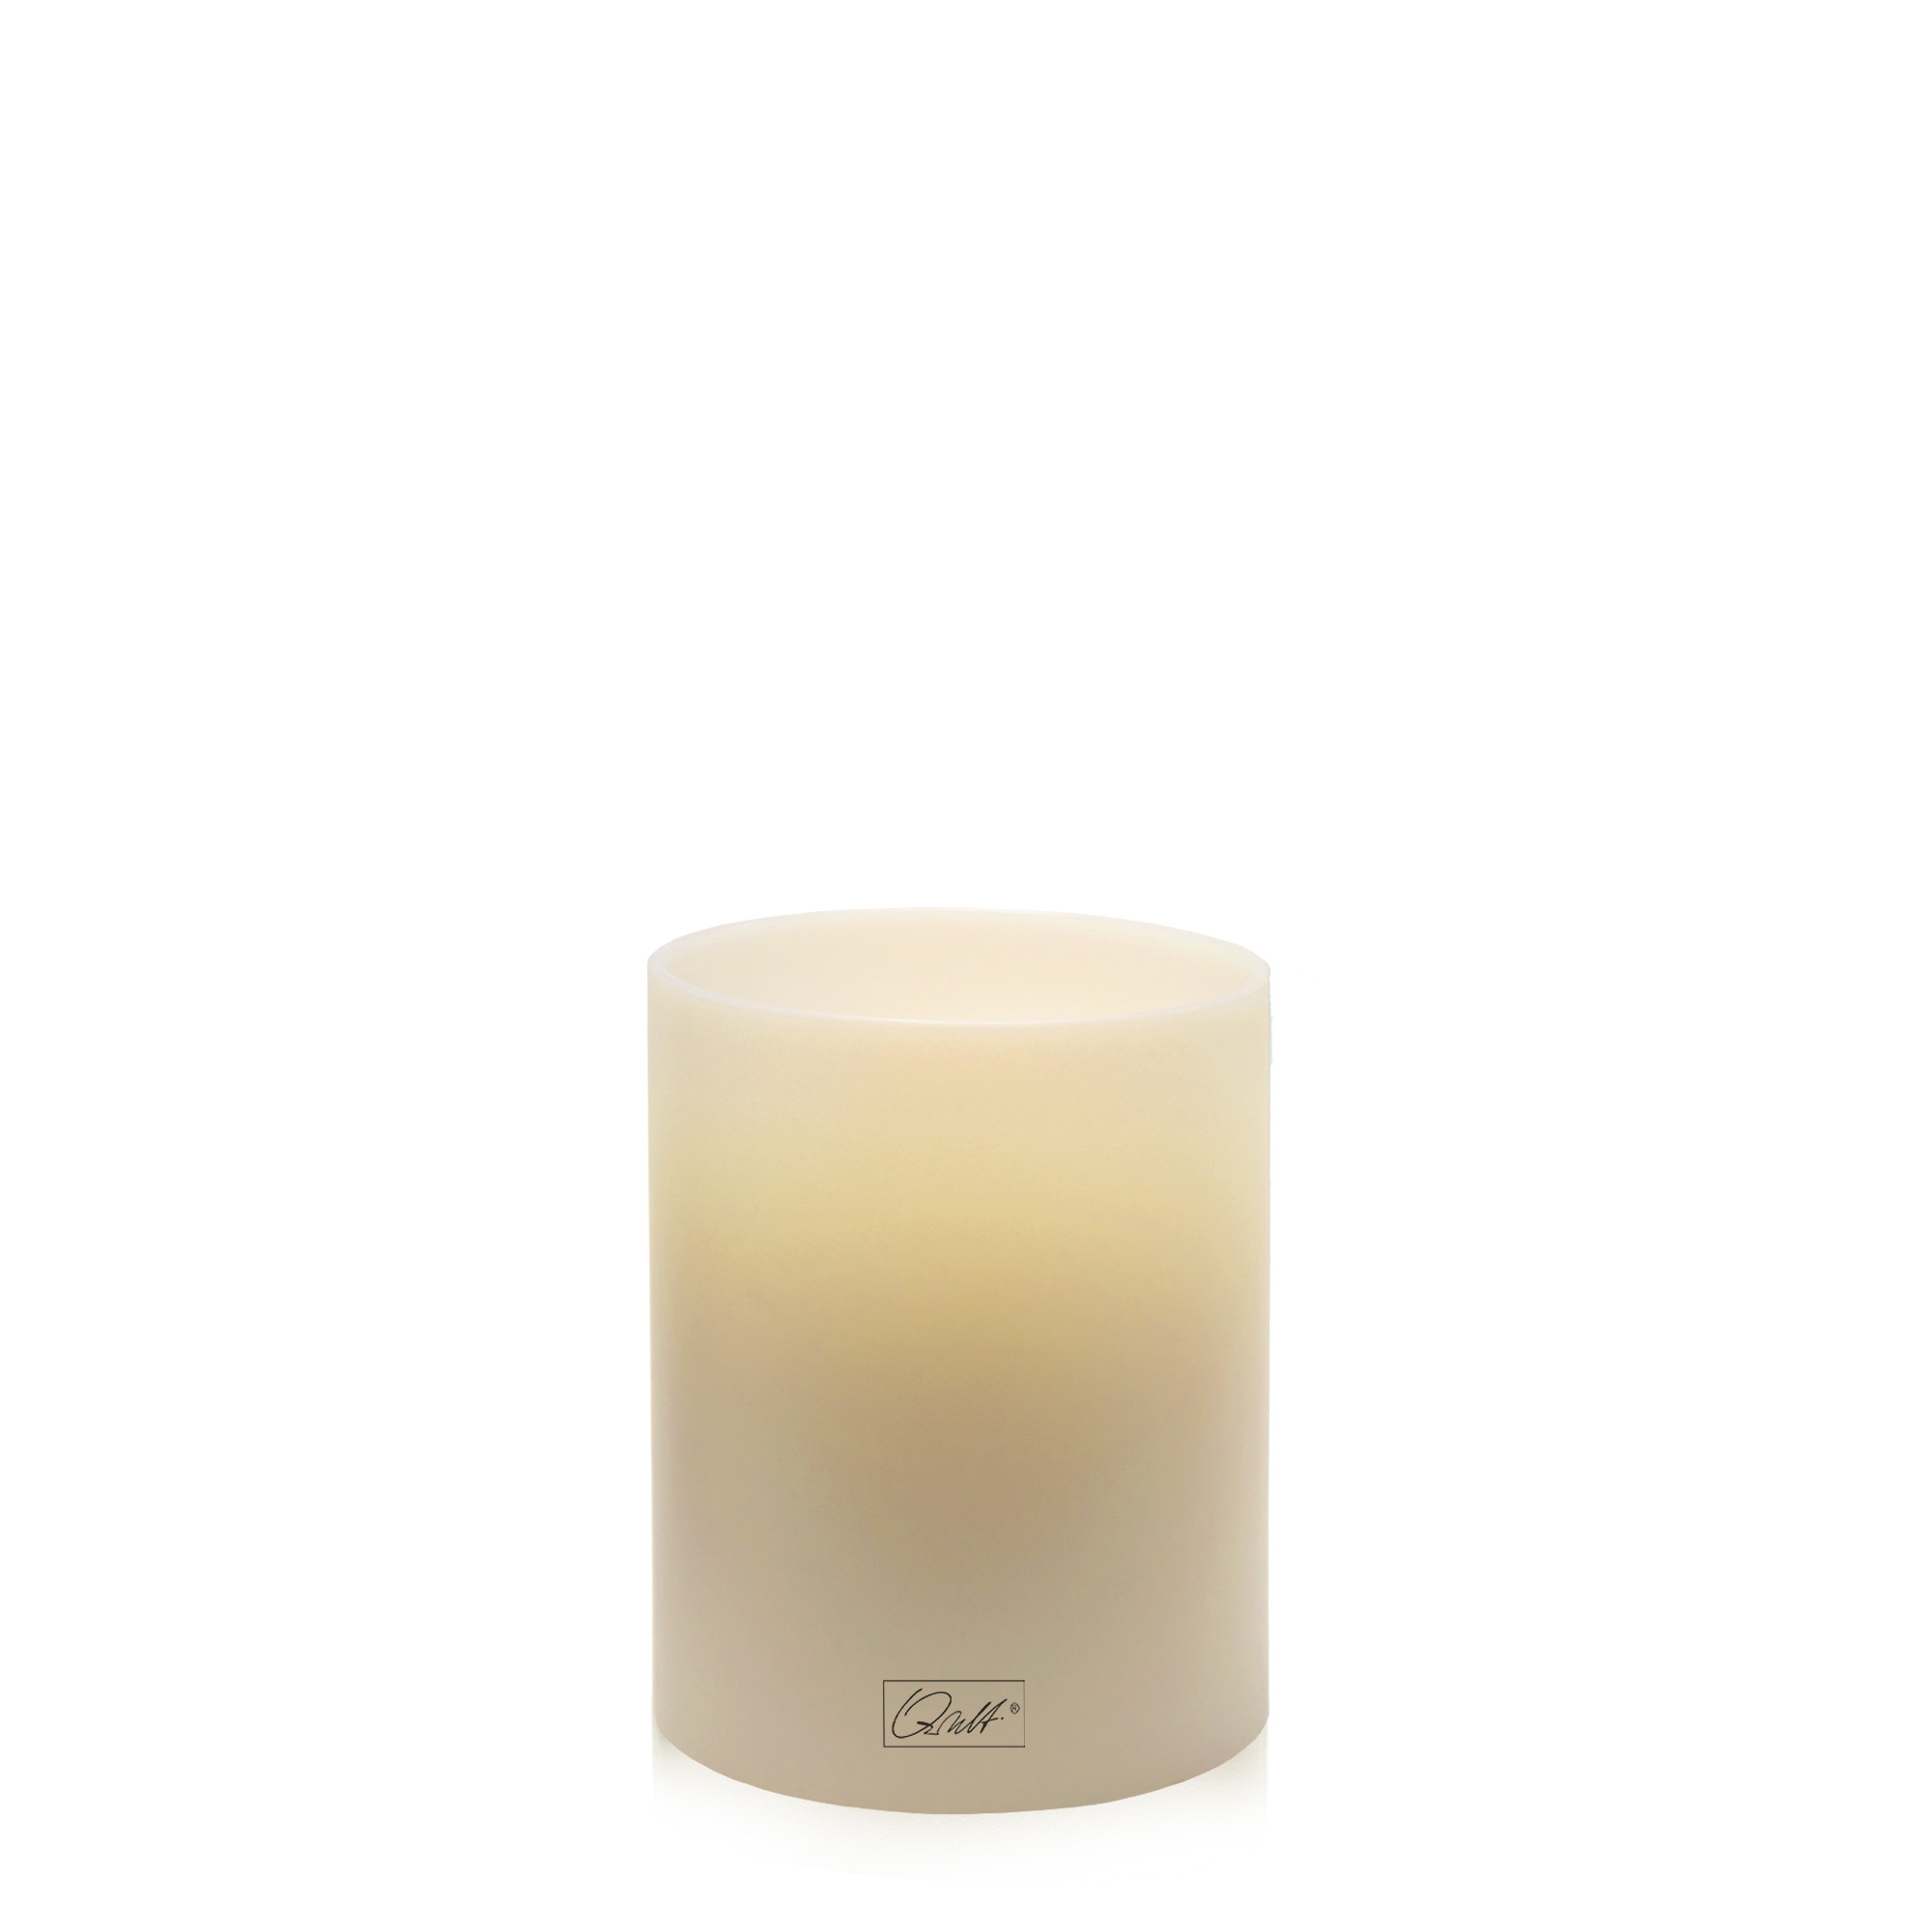 Qult Farluce Inside - Tealight Candle Holder Ø 8 cm x H 9 cm - Brazilian Sand